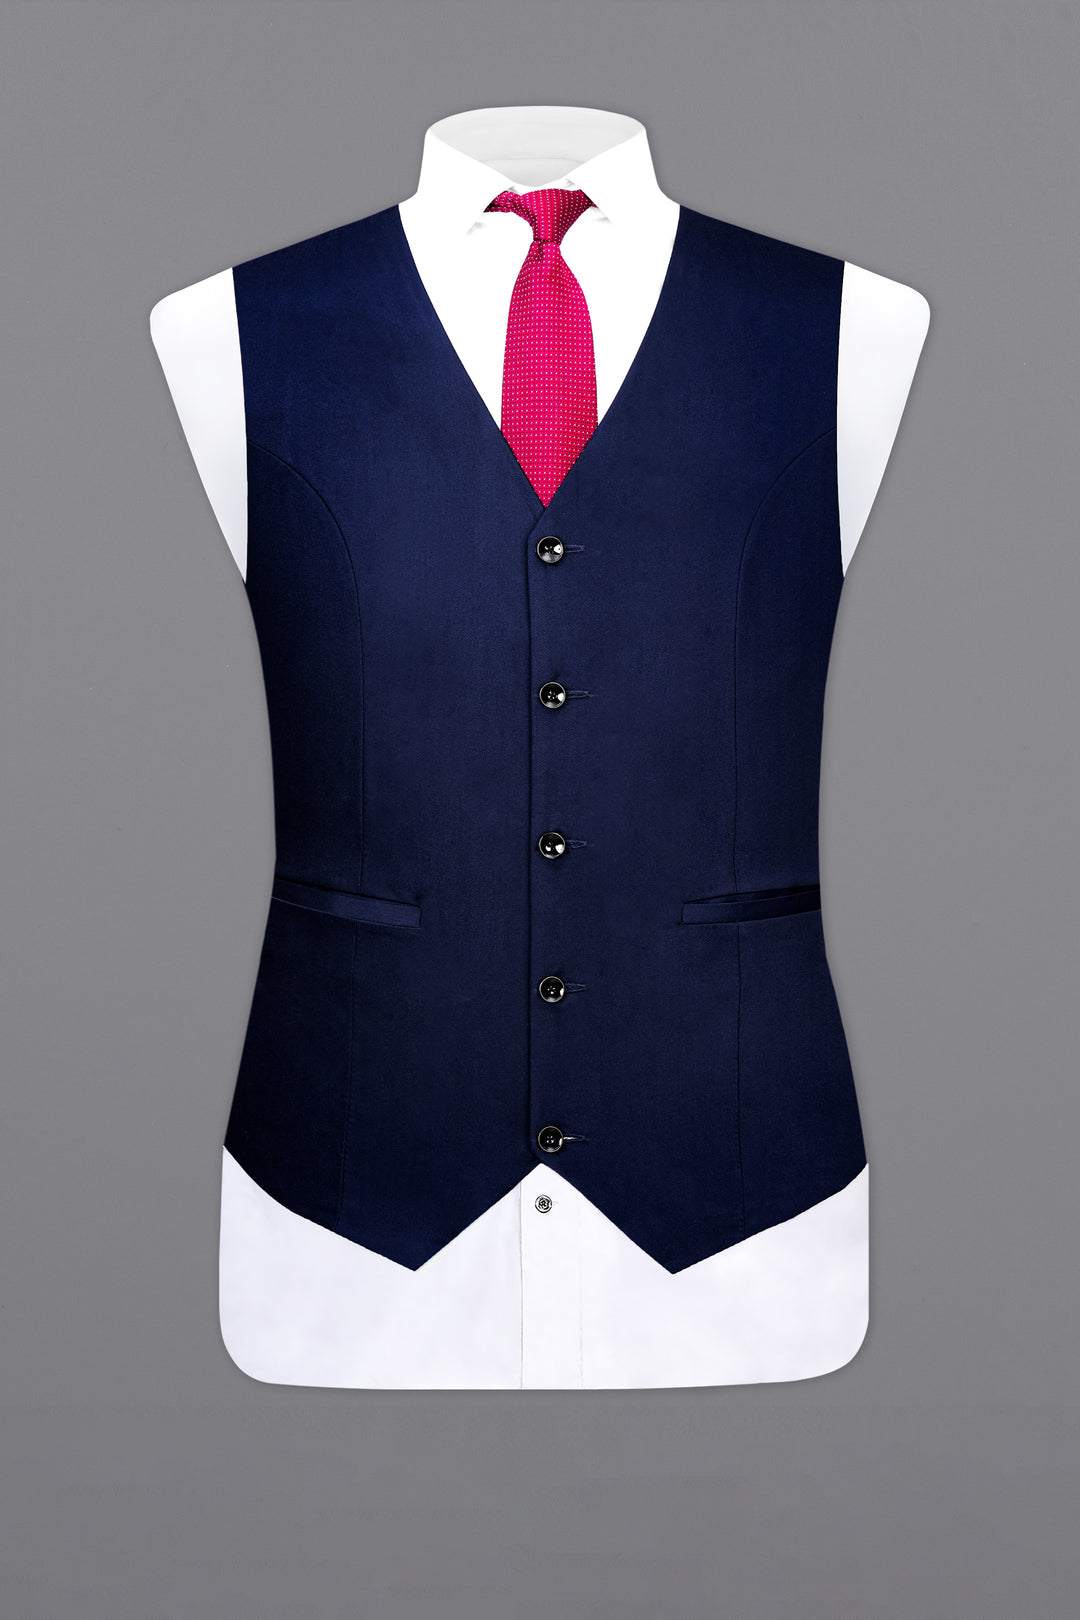 COOFANDY Men's Suit Vest Slim Fit Formal Business Dress Vest Casual Wedding  Waistcoat at Amazon Men's Clothing store